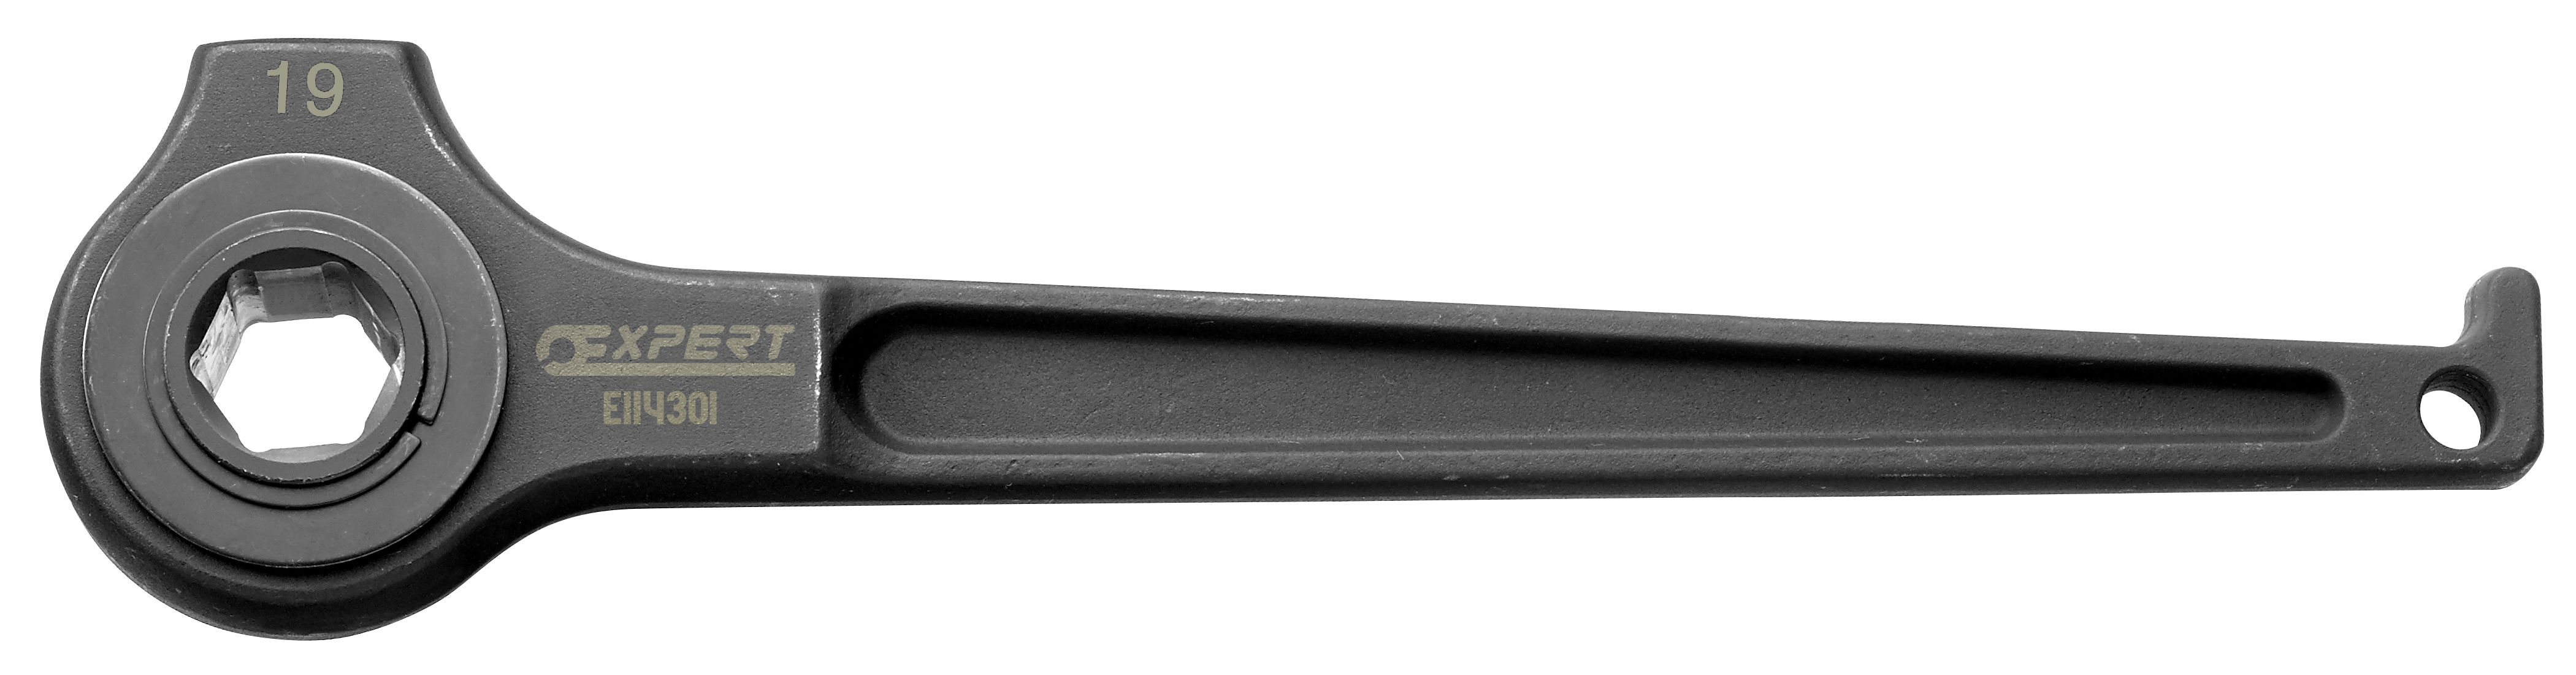 1.E114301 Werfpuntsleutel - 19 mm